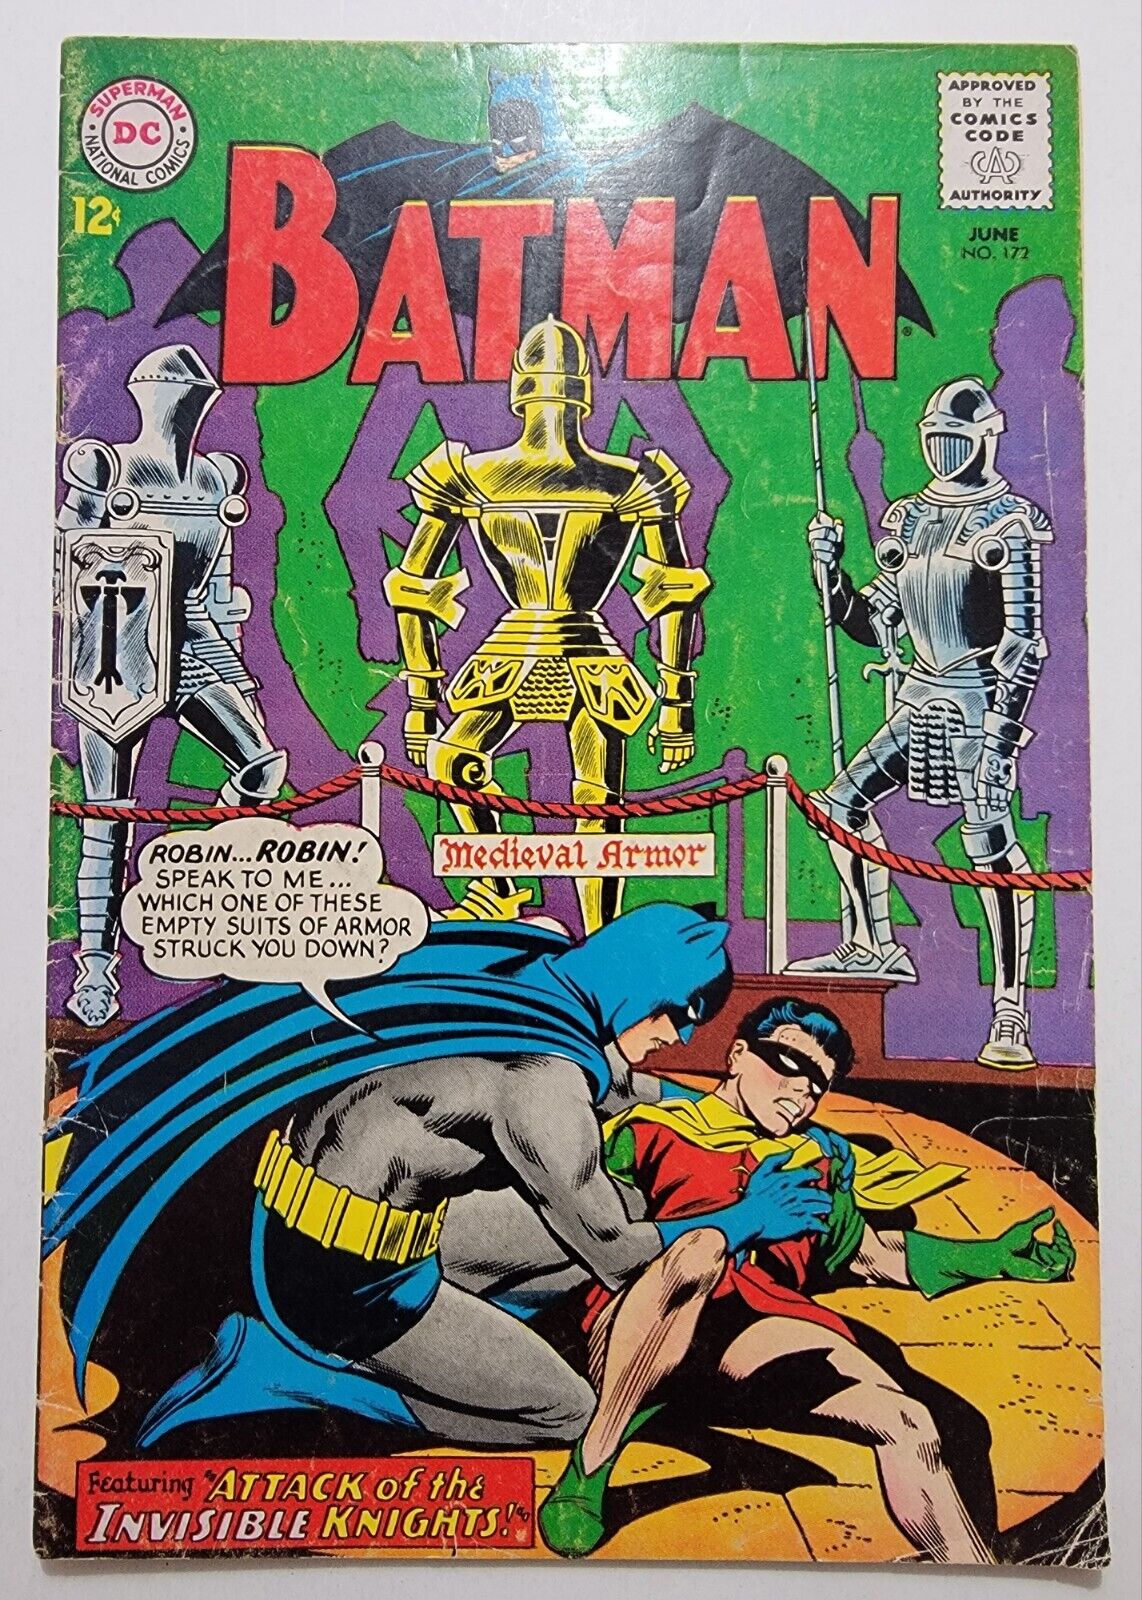 Batman #172 G/VG Featuring Invisible Knights 1965 Joe Giella, Vintage Silver Age